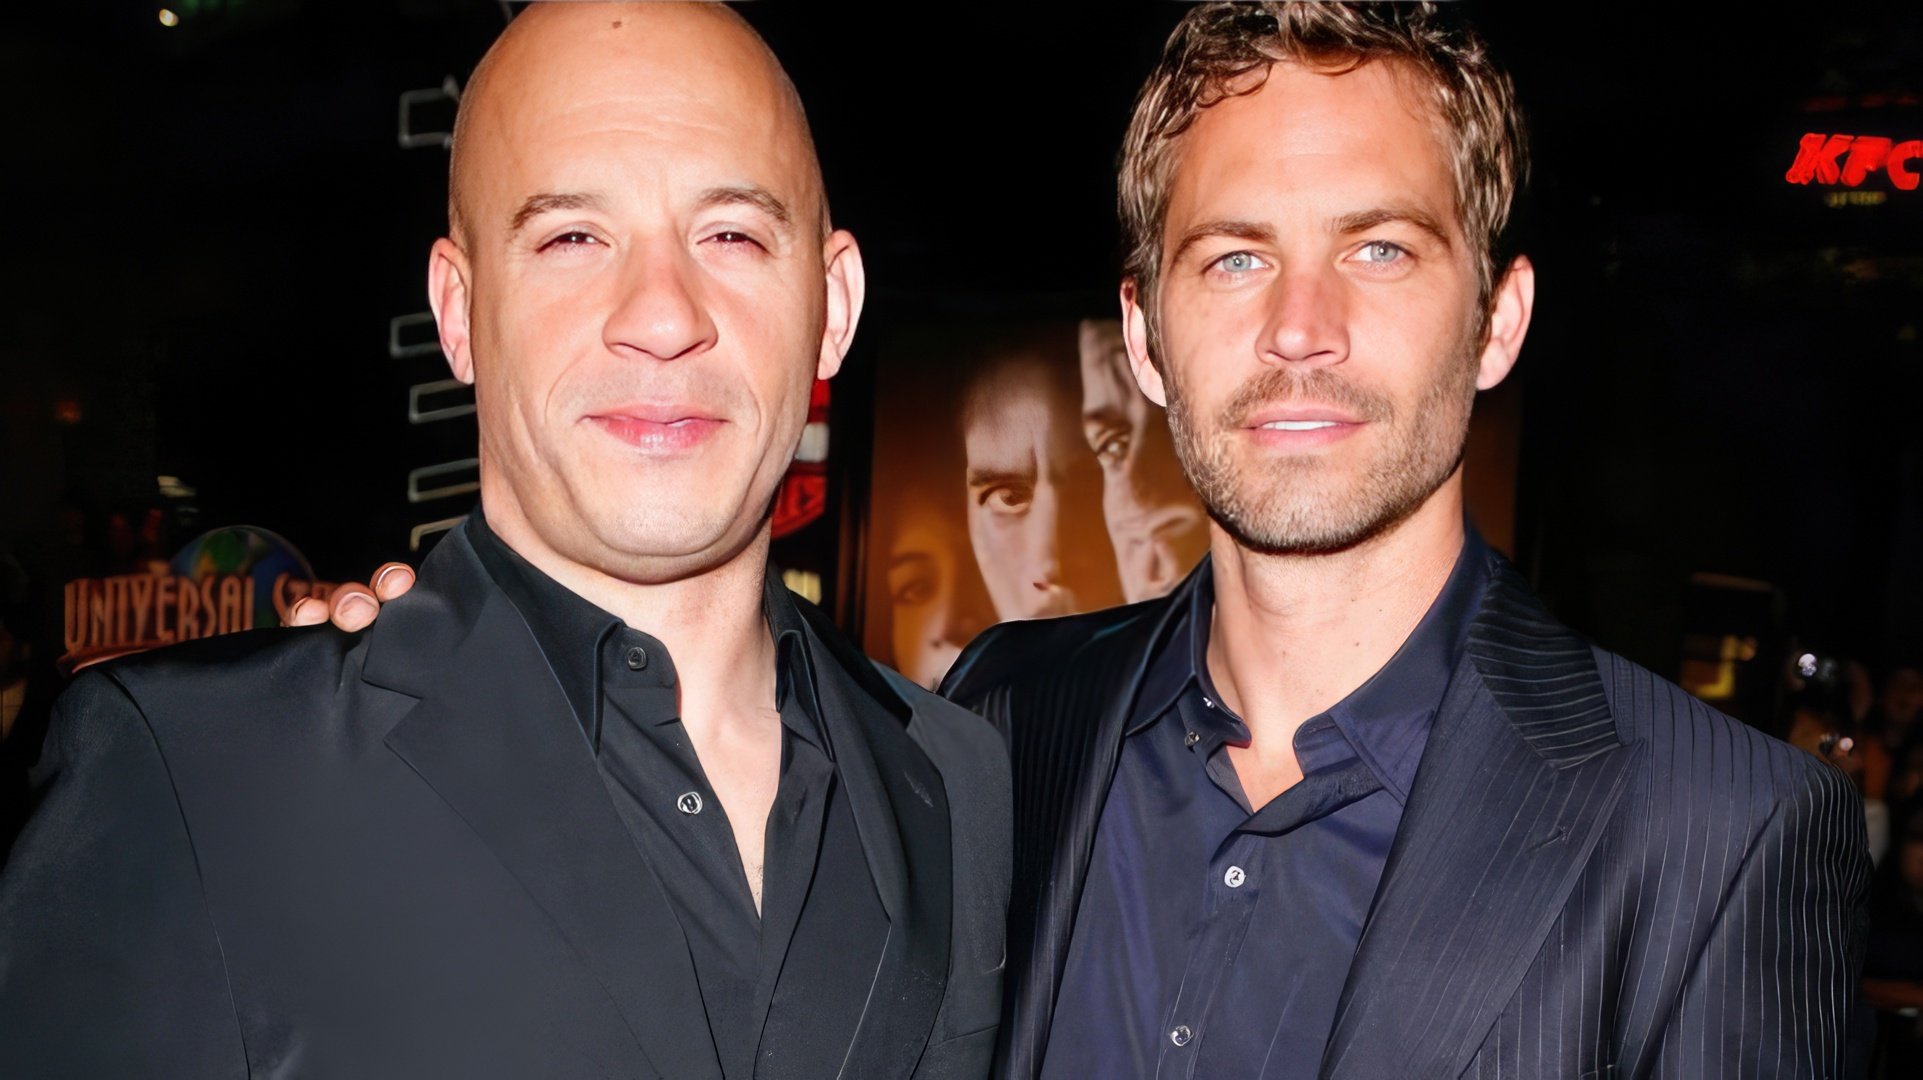 Paul Walker and Vin Diesel were friends off-screen as well